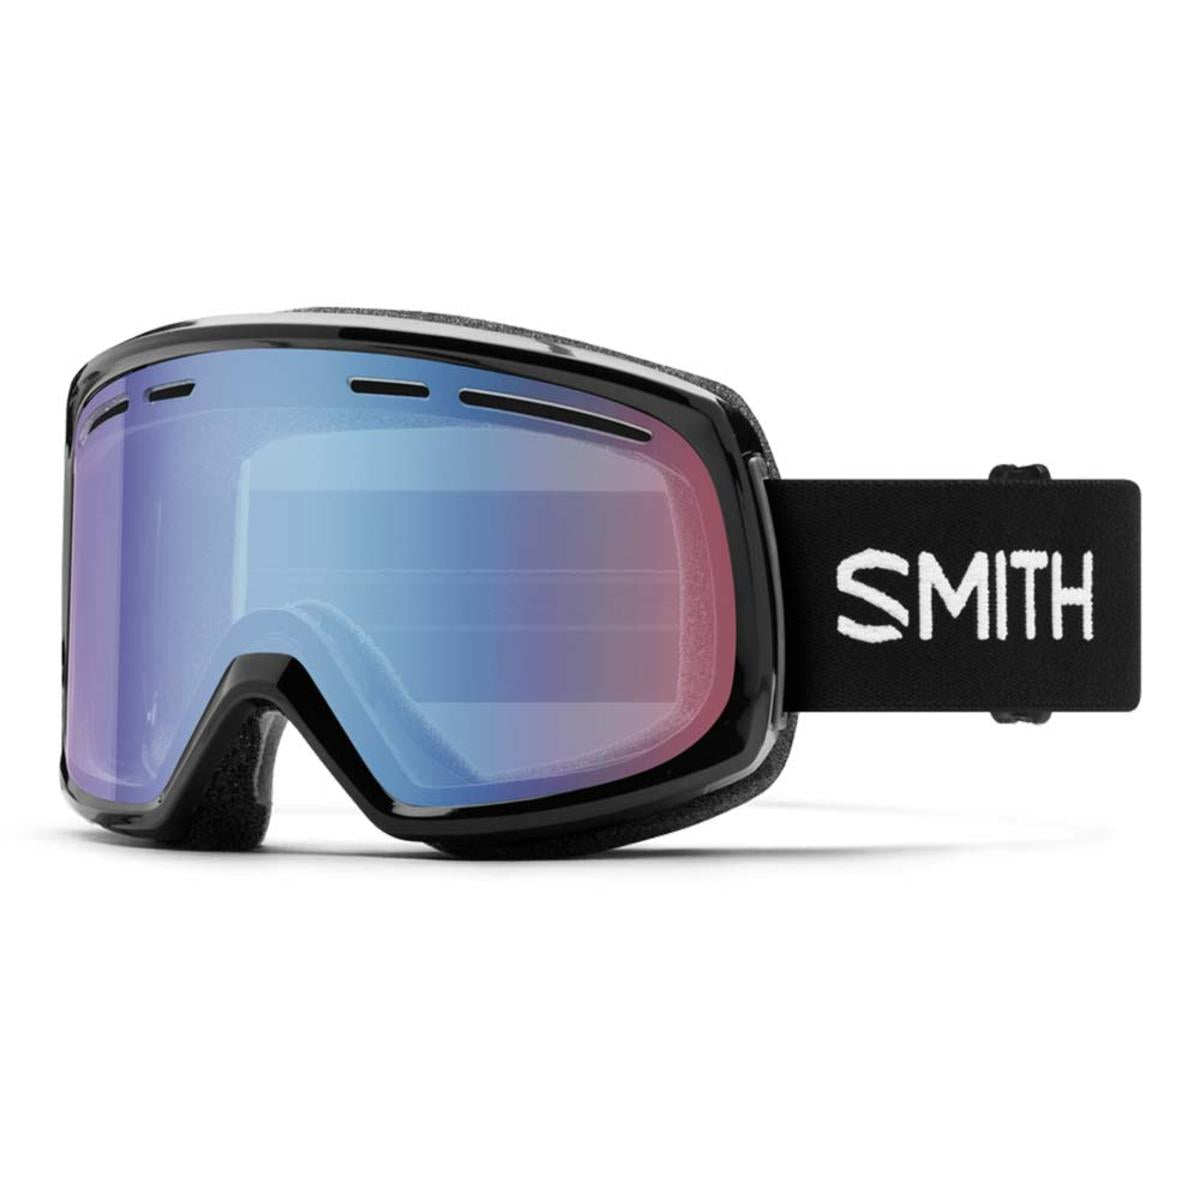 Smith Optics Range Goggles Blue Sensor Mirror - Black Frame